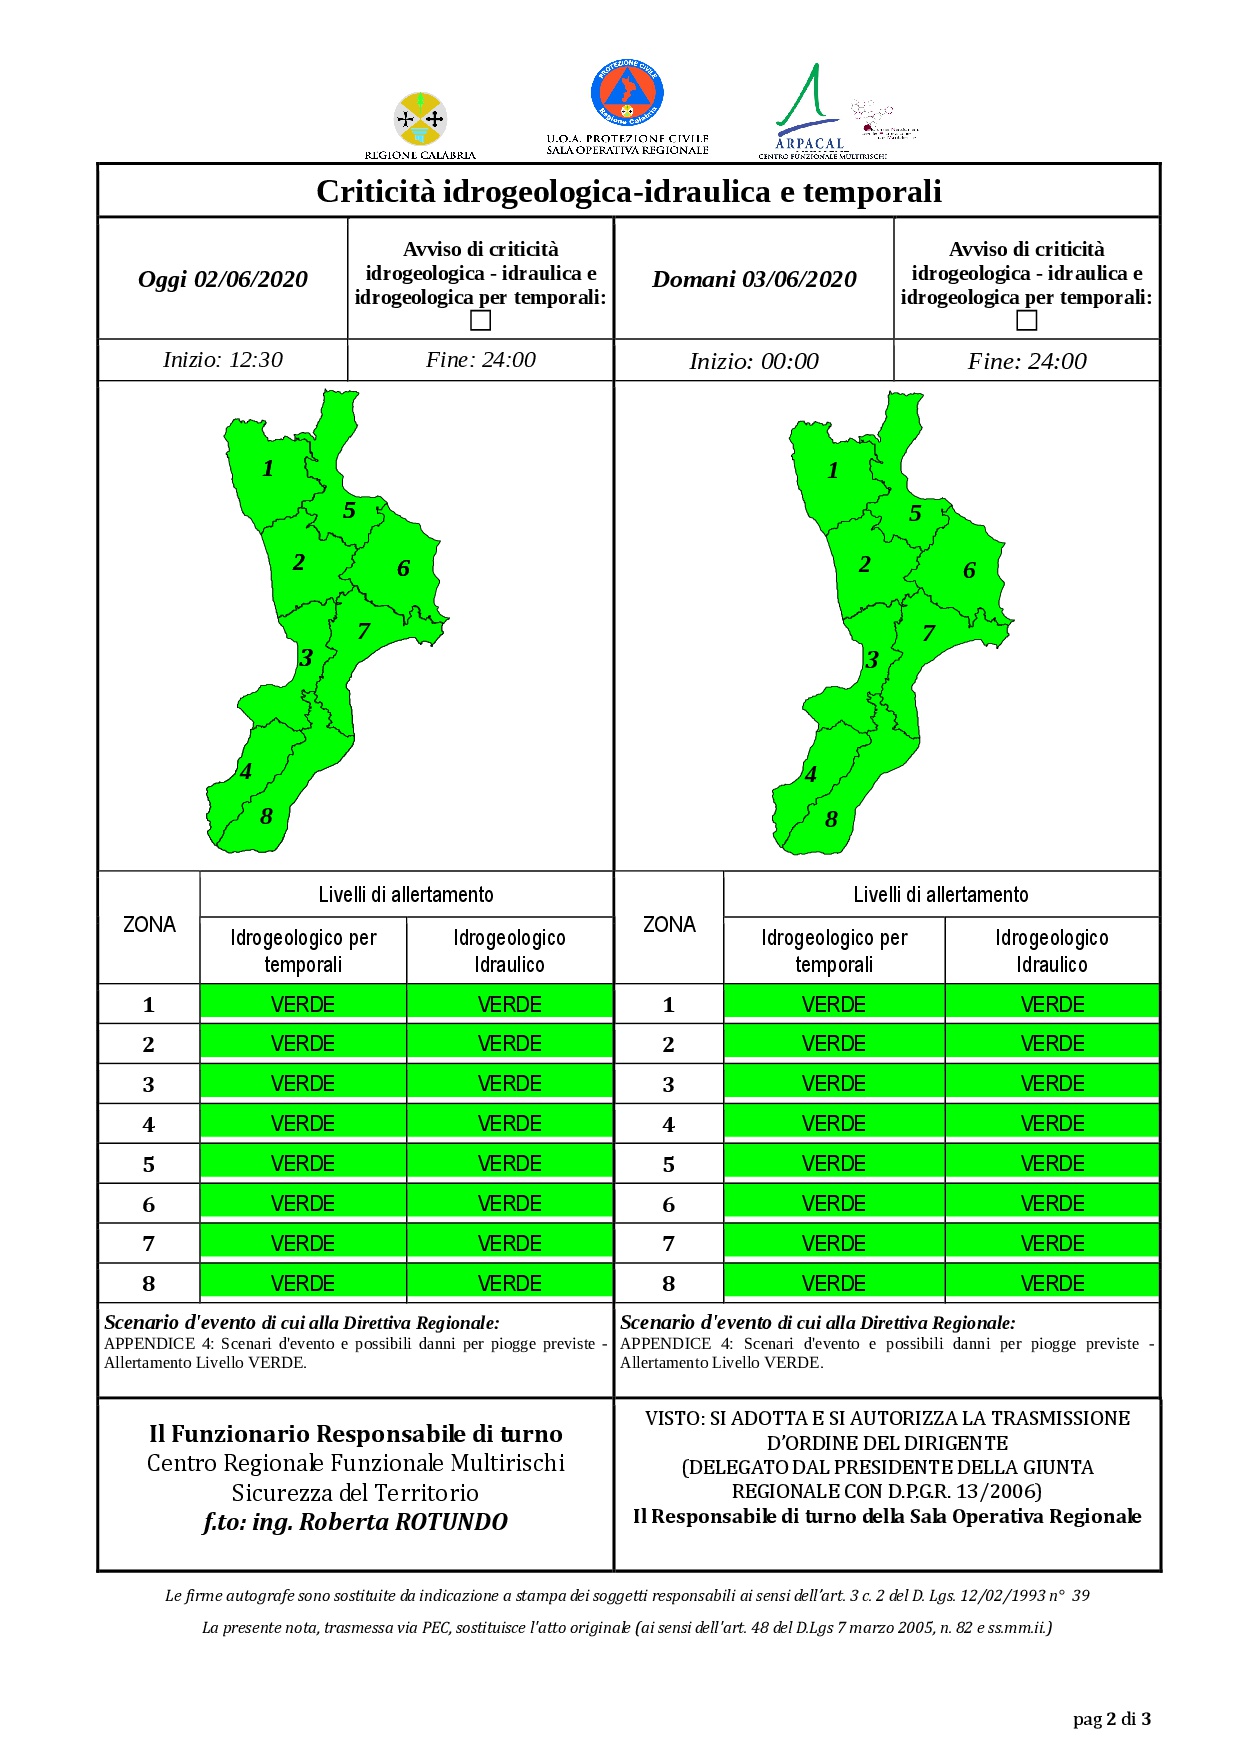 Criticità idrogeologica-idraulica e temporali in Calabria 02-06-2020